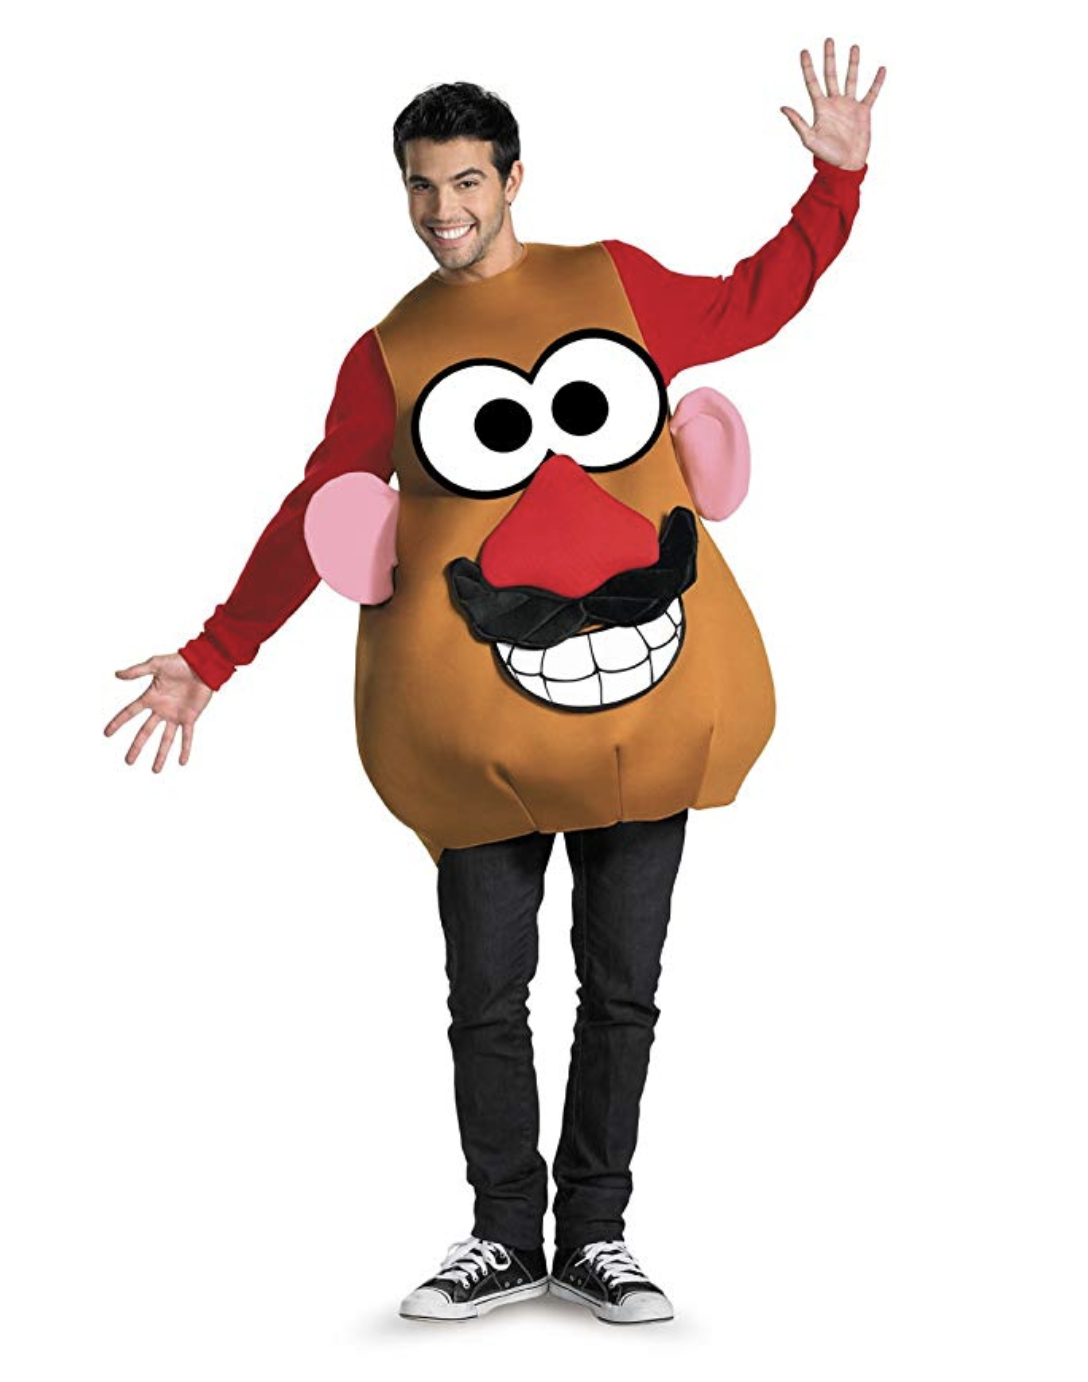 Disguise's Mr./Mrs. Potato Head Costume